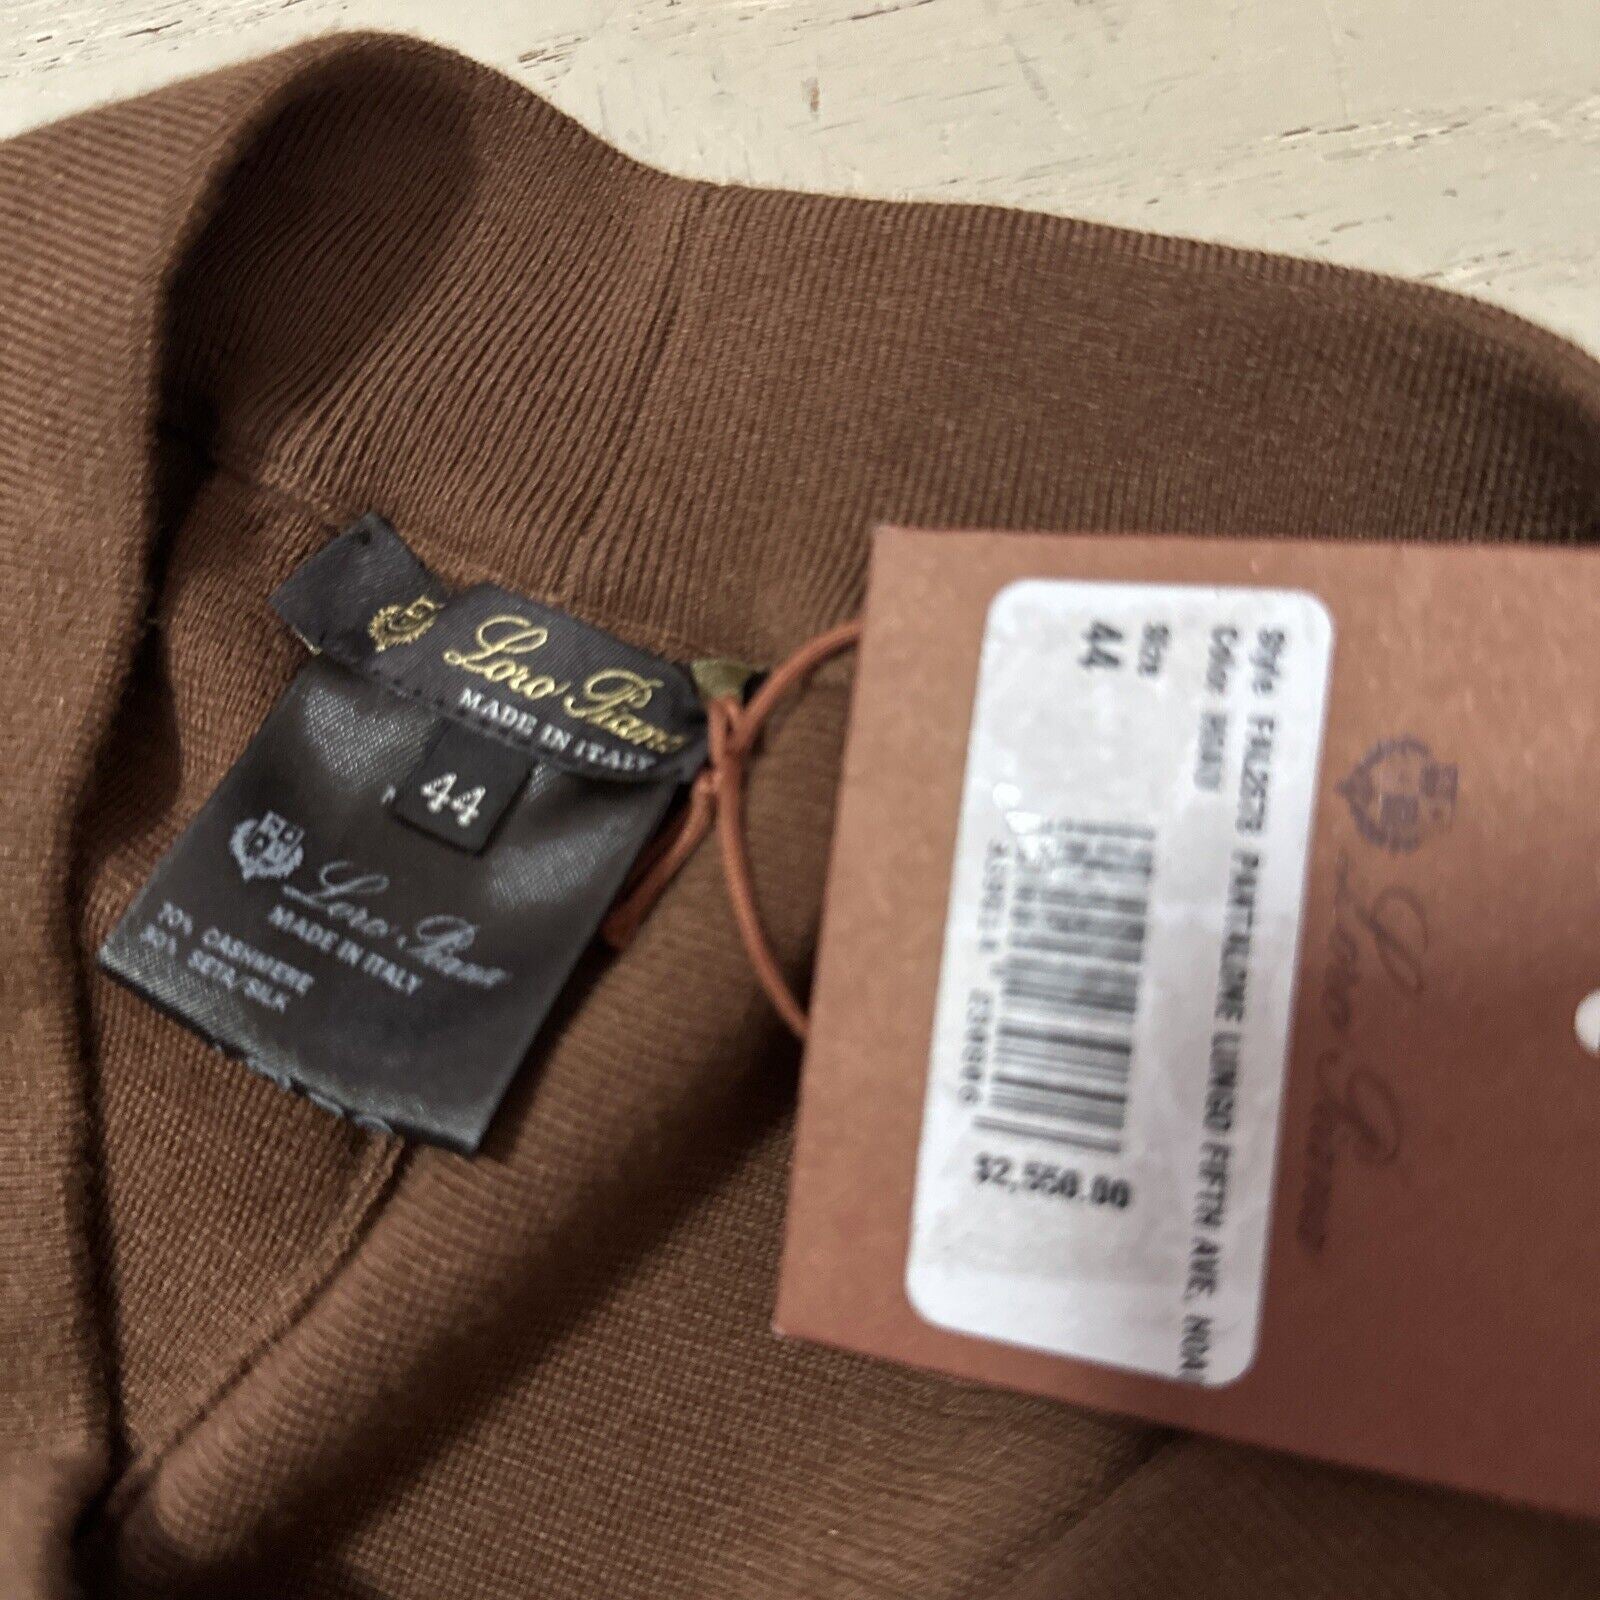 New $2550 Loro Piana Lungo Cashmere & Silk Pants Color: MARRON GLACE 44/10 Italy